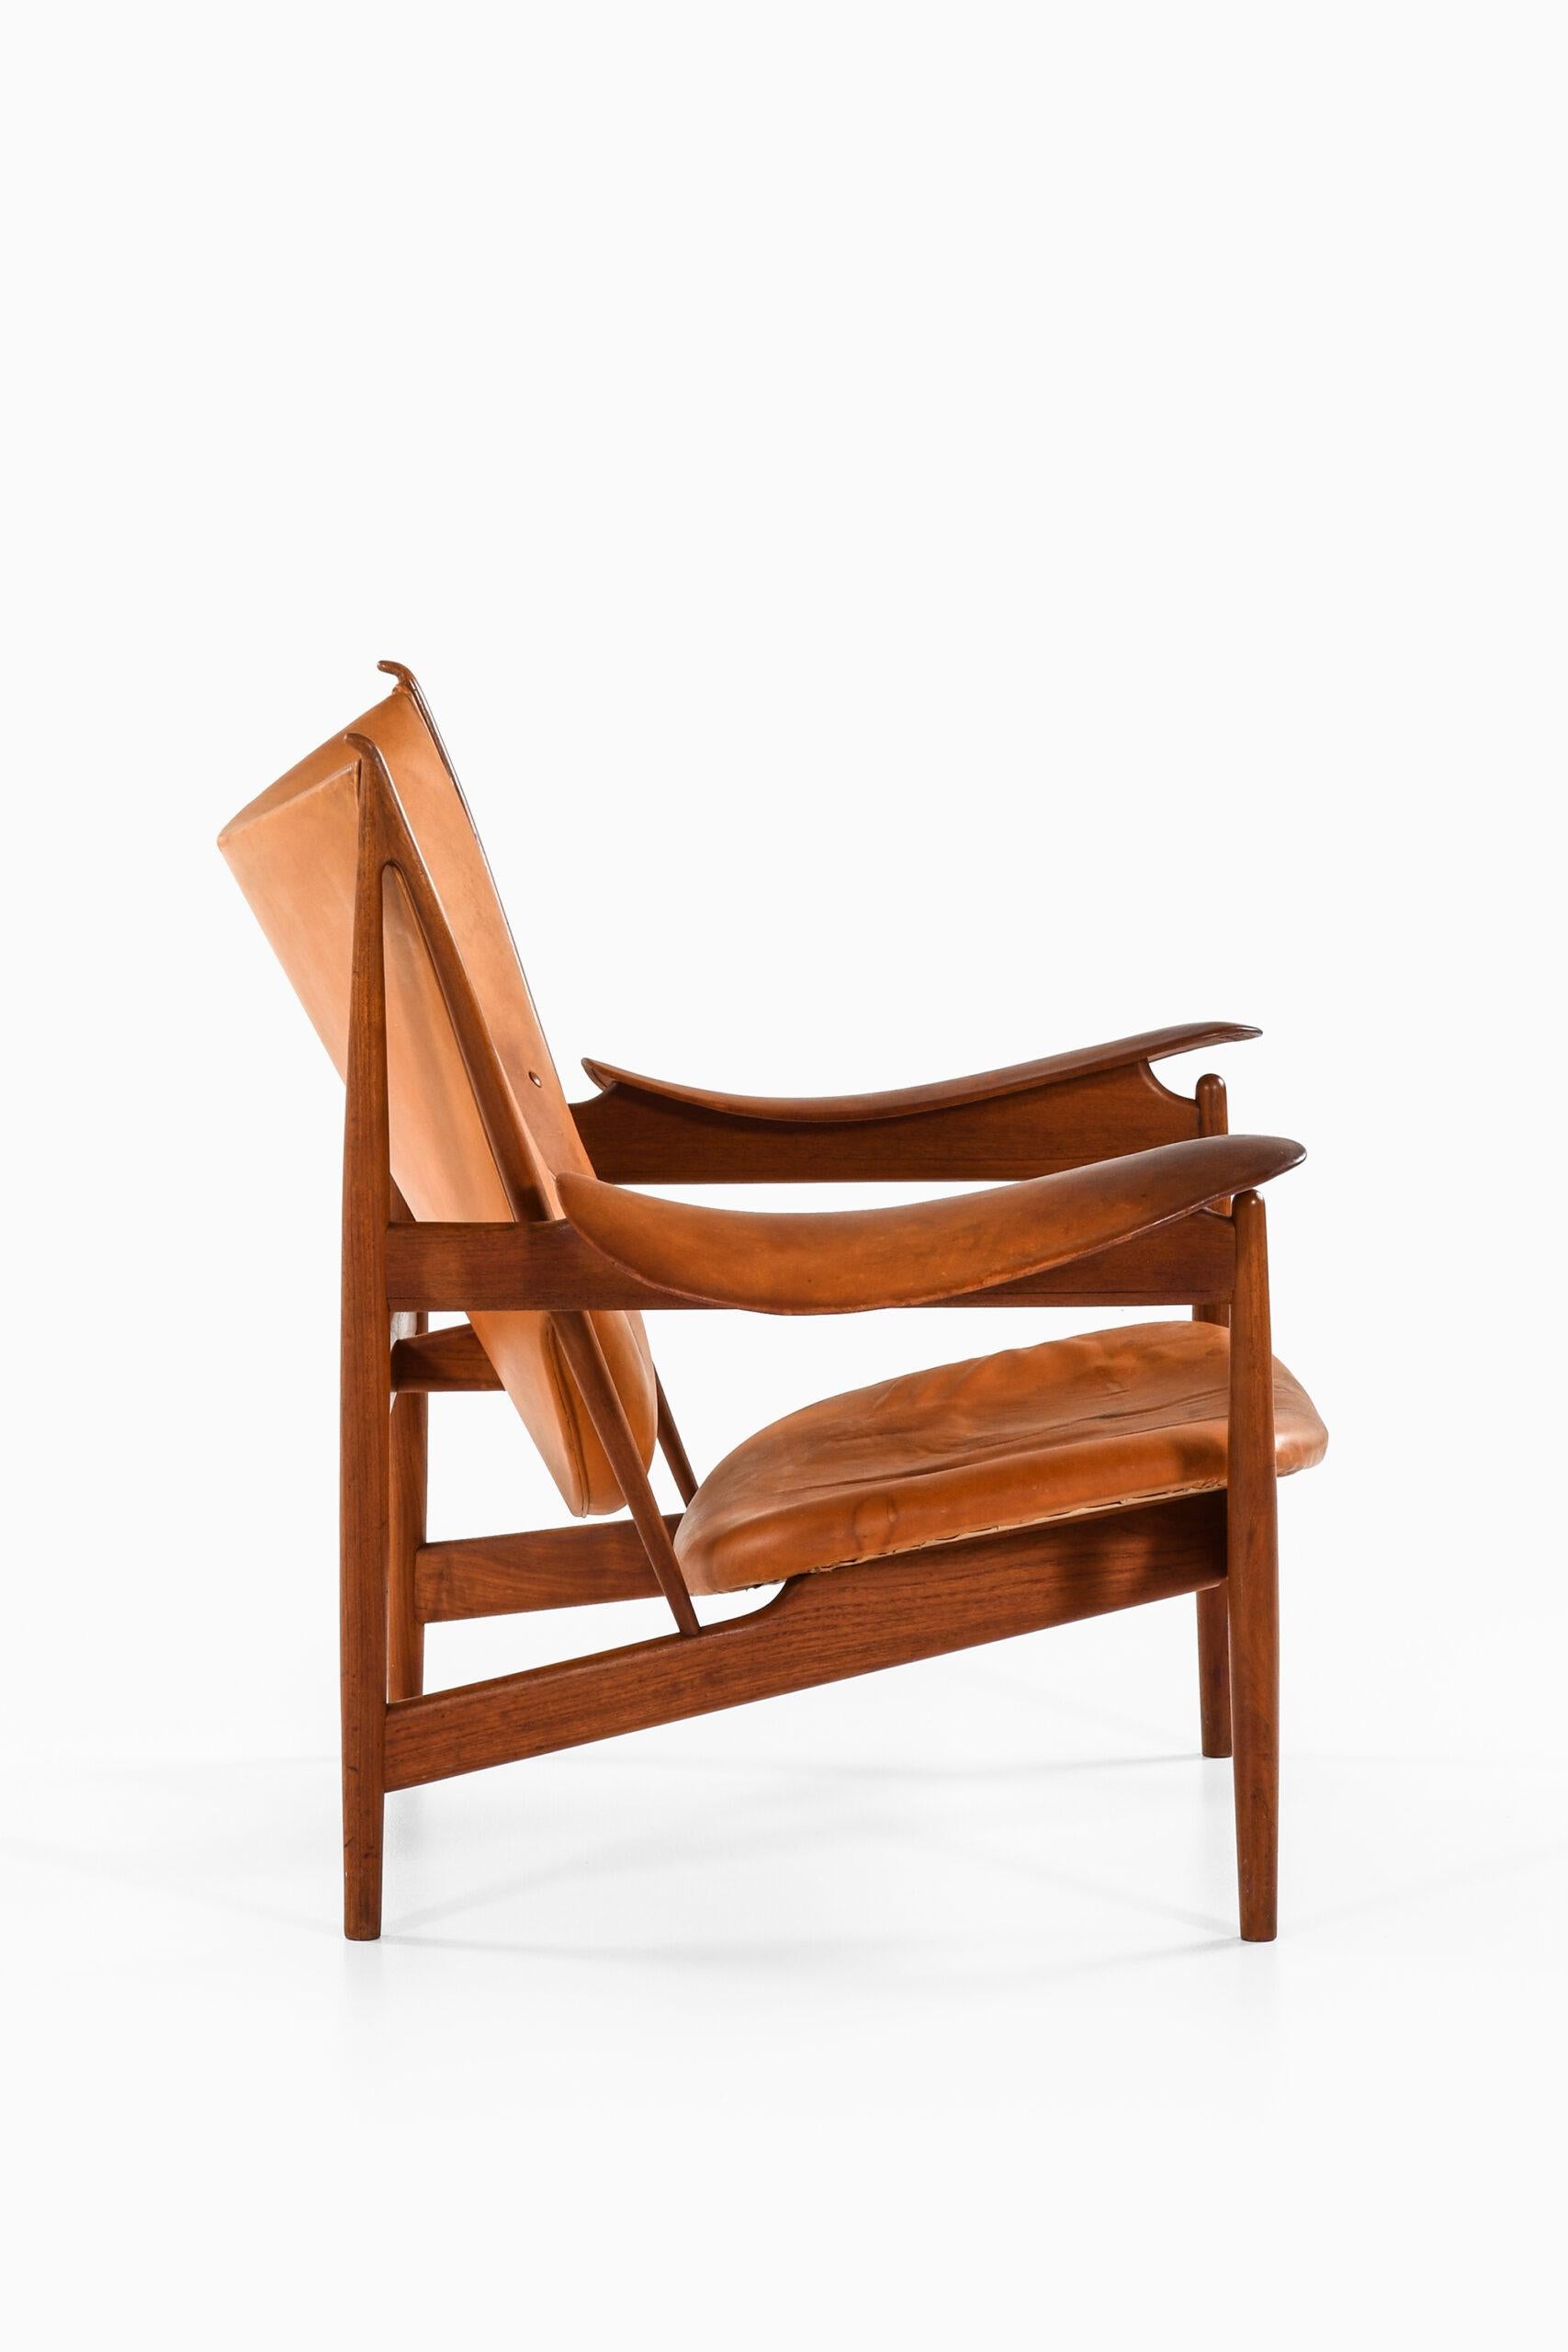 Finn Juhl Chieftain Easy Chair Produced by Cabinetmaker Niels Vodder 2